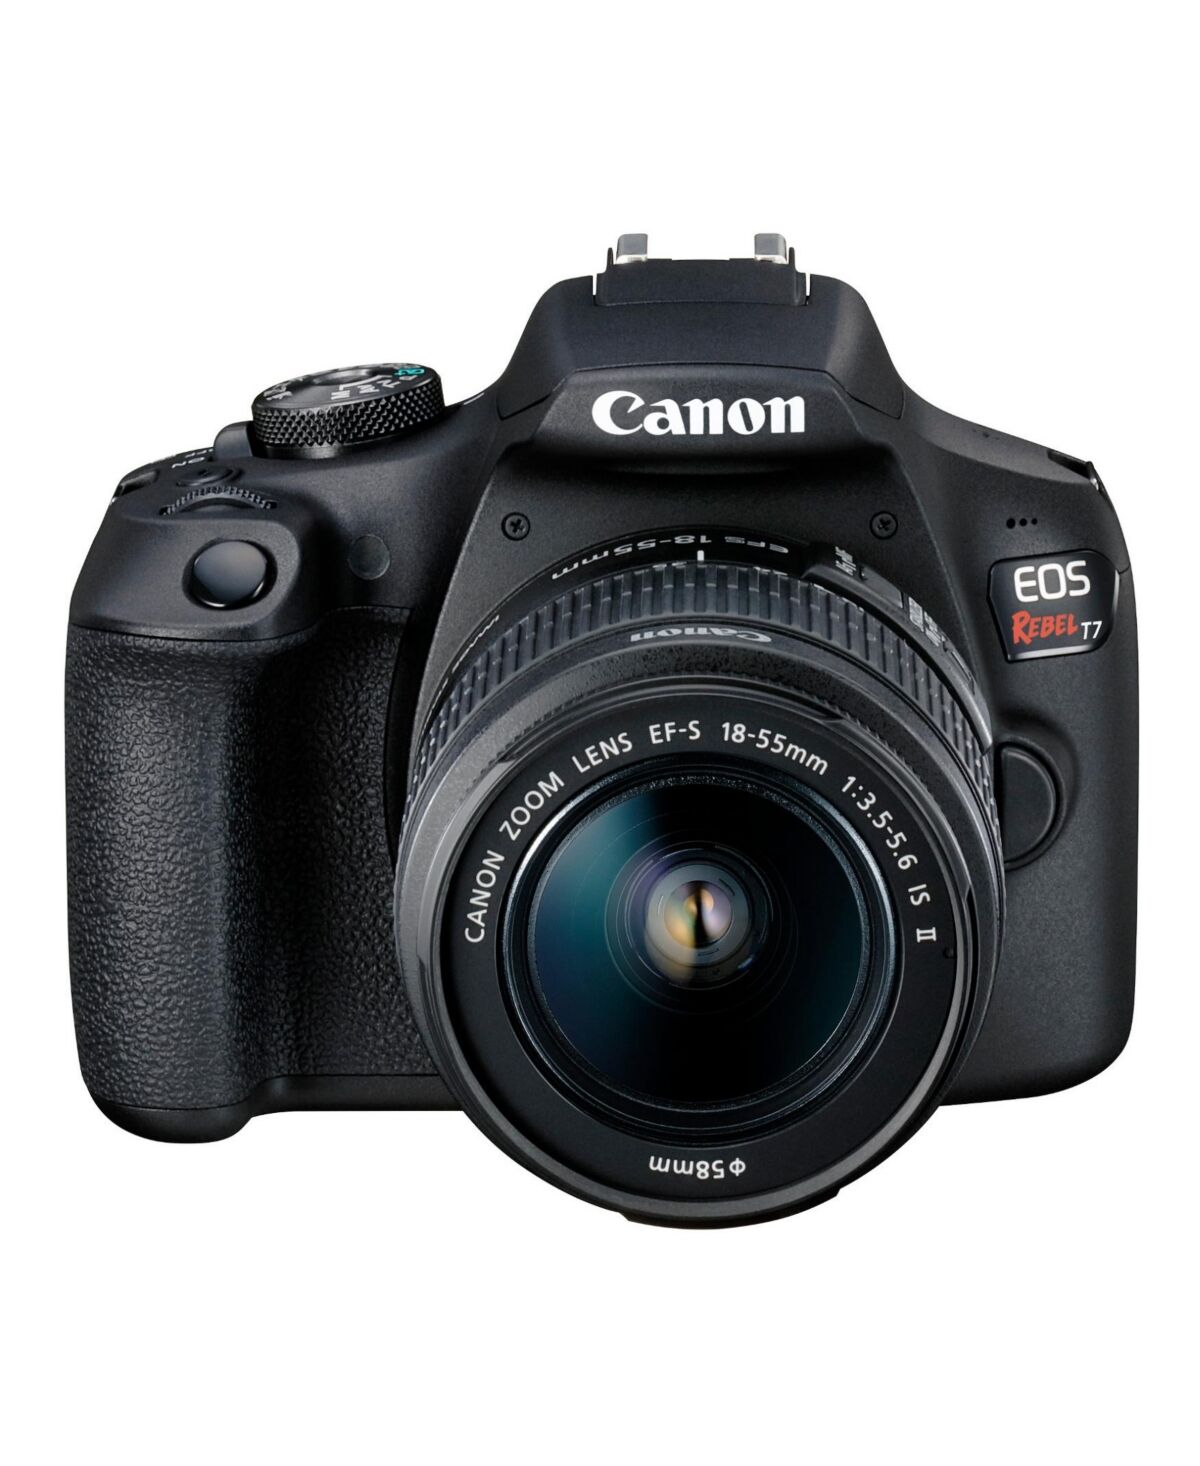 Canon Eos Rebel T7 Dslr Camera and Ef-s 18-55mm Is Ii Lens Kit - Black